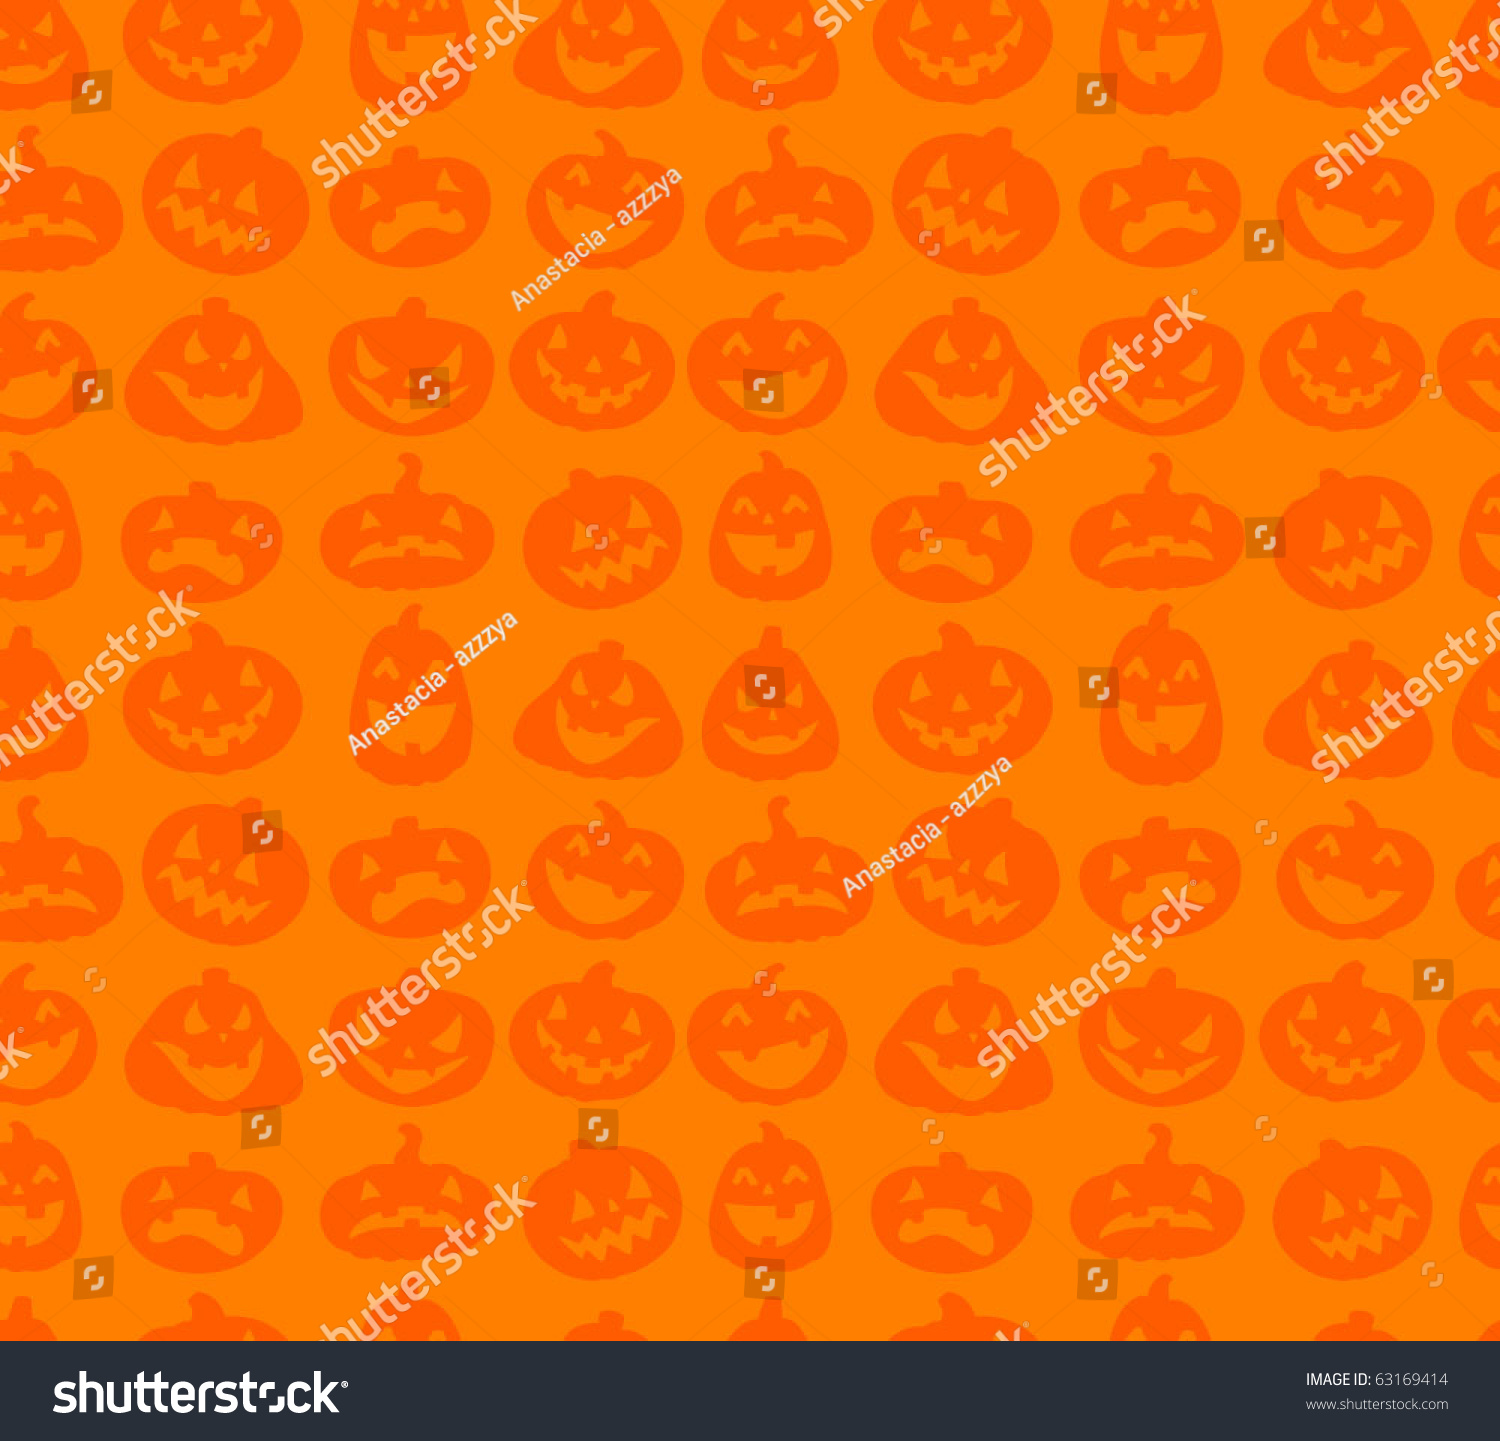 Halloween Seamless Background Stock Vector 63169414 - Shutterstock